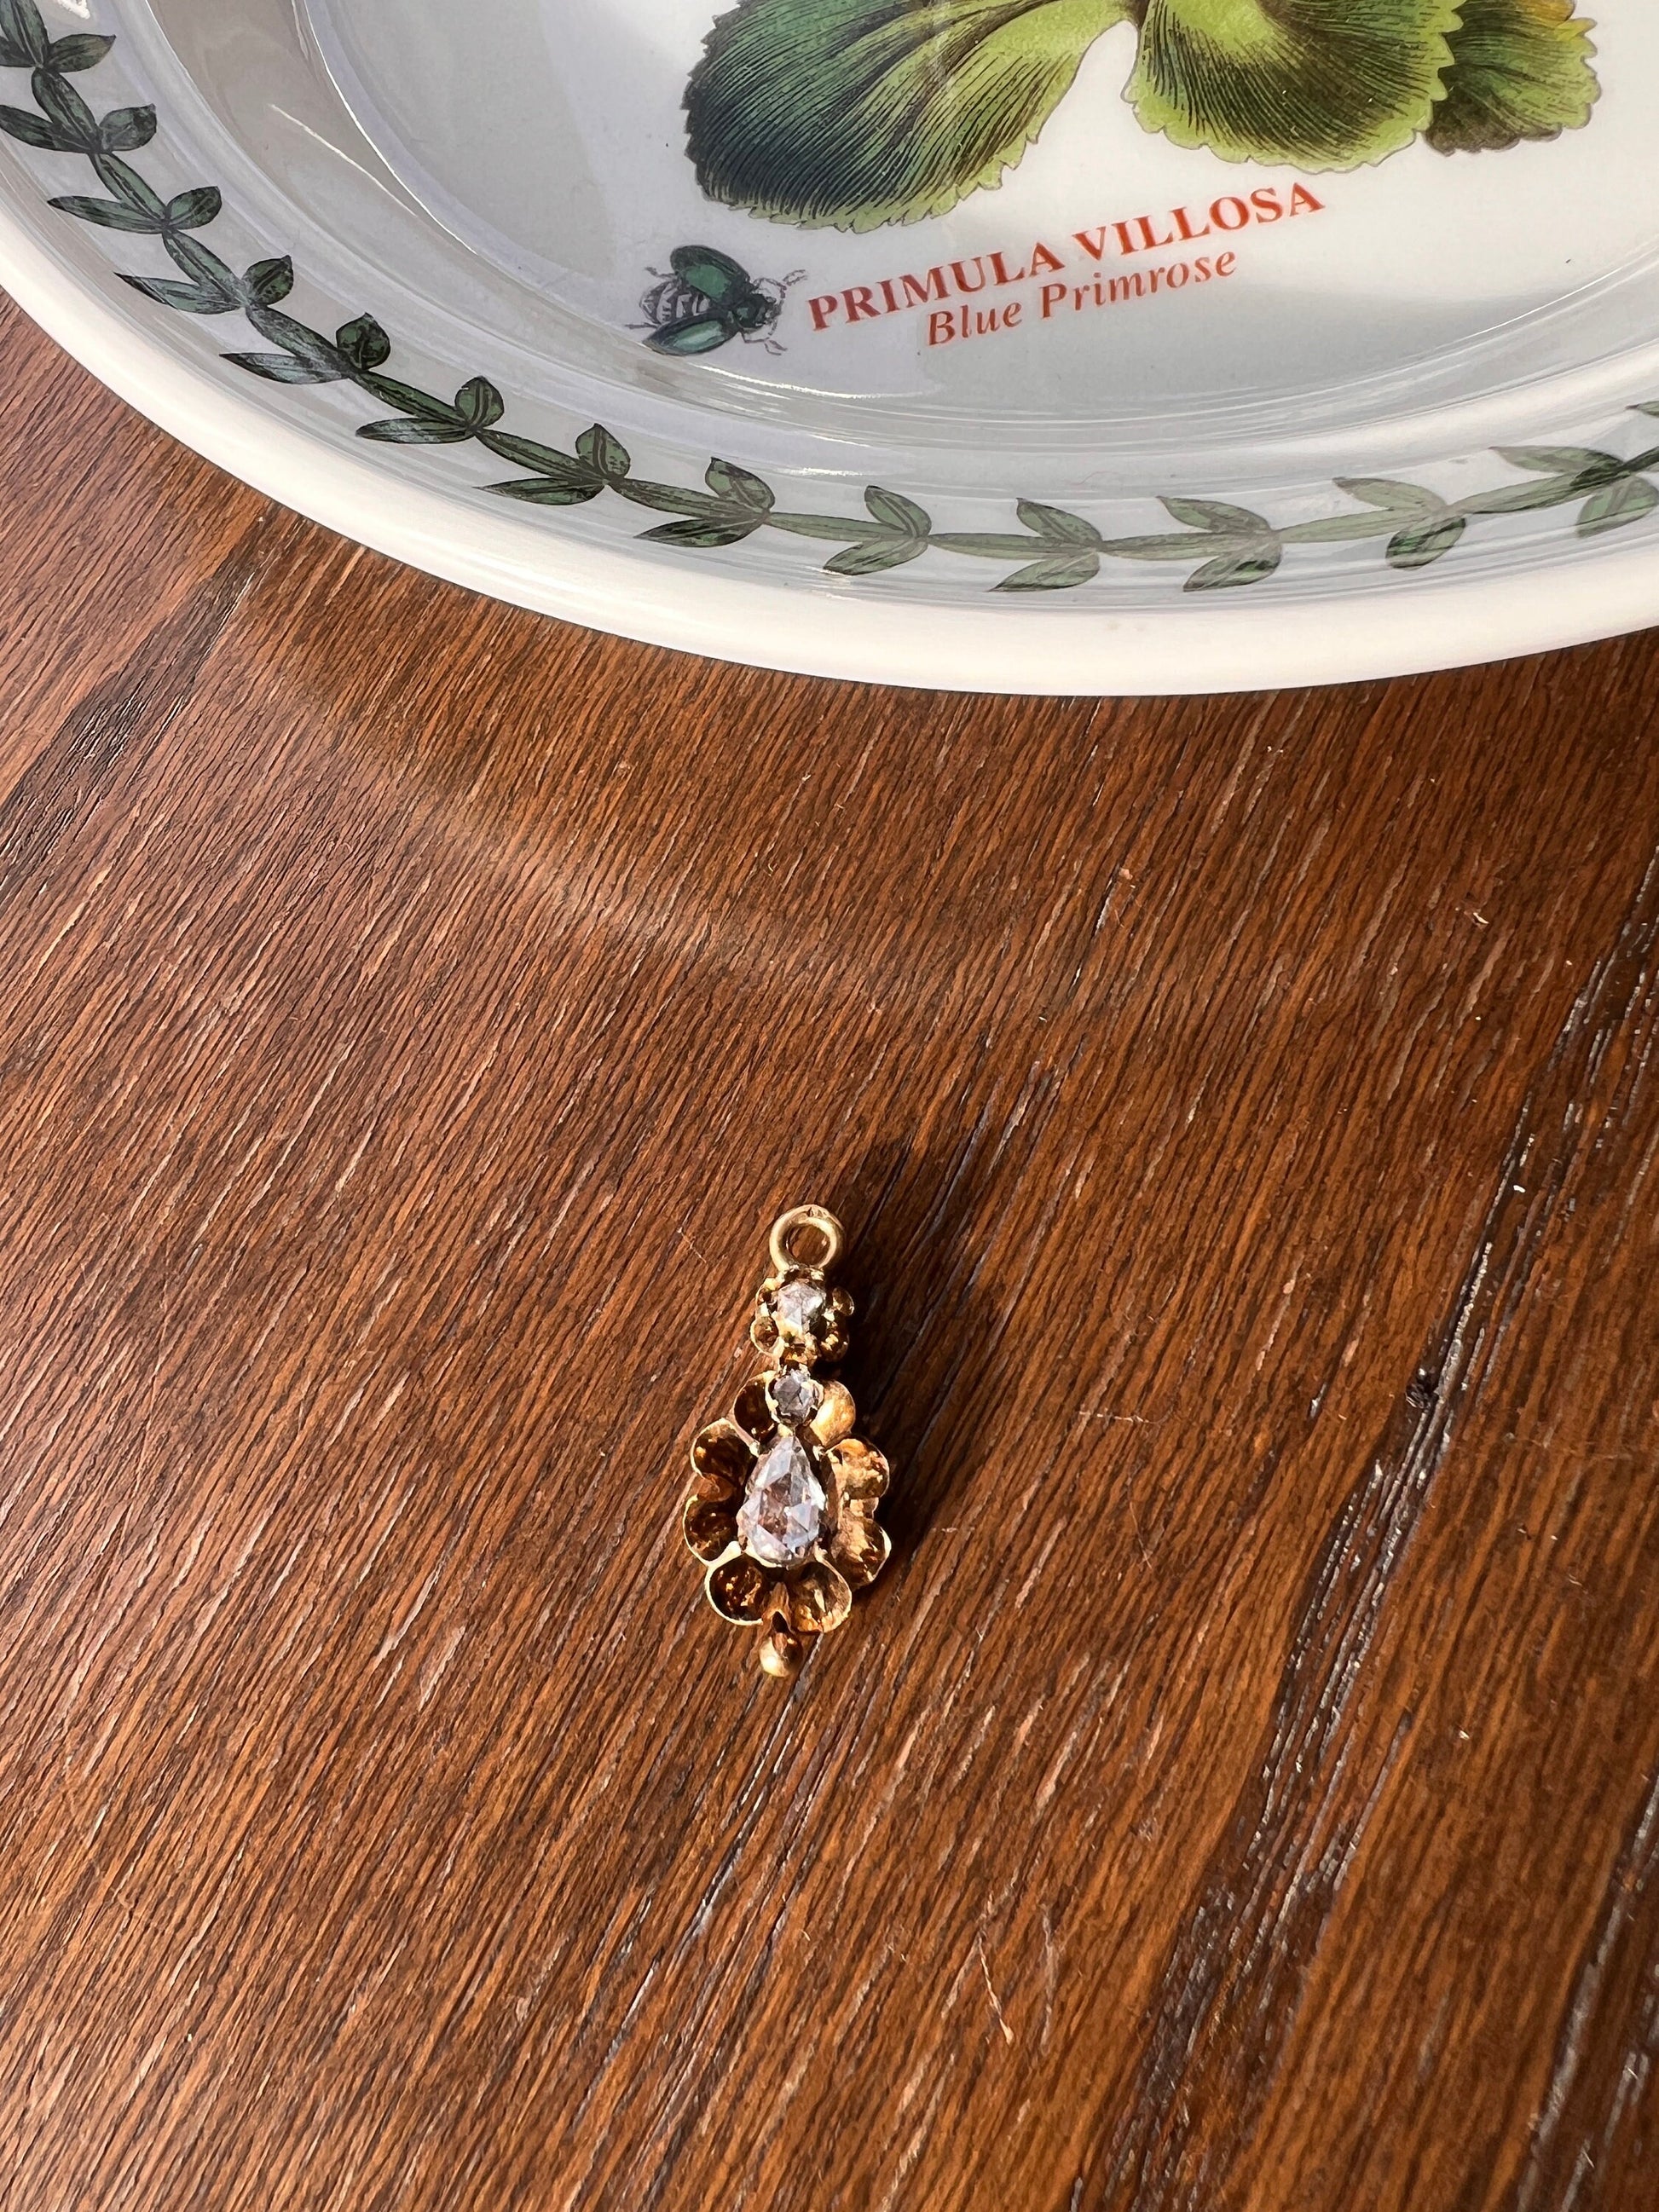 TEARDROP Diamond VICTORIAN French Antique 18k GOLD Buttercup Pendant Foiled 6.7mm Rose Cut Pear Tear Drop Collet Set Romantic Gift Ornate